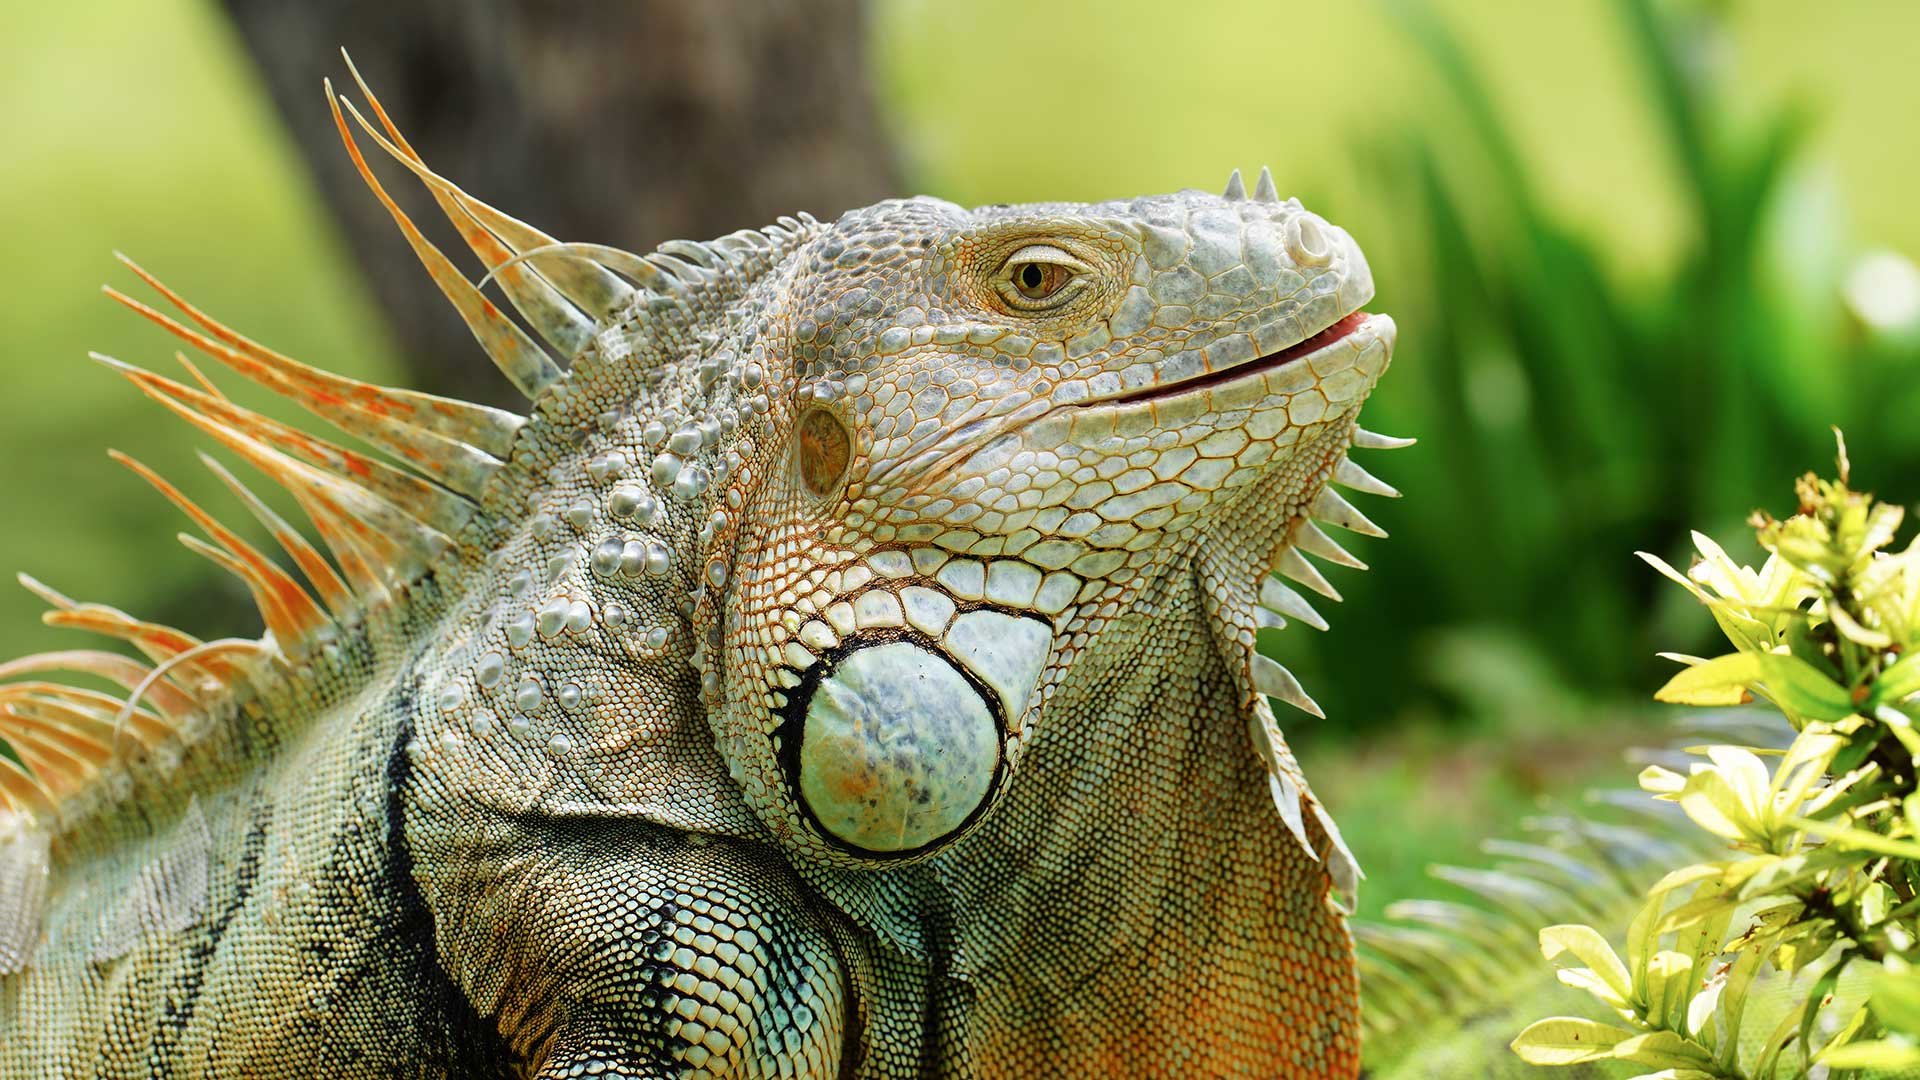 Close up of Iguana